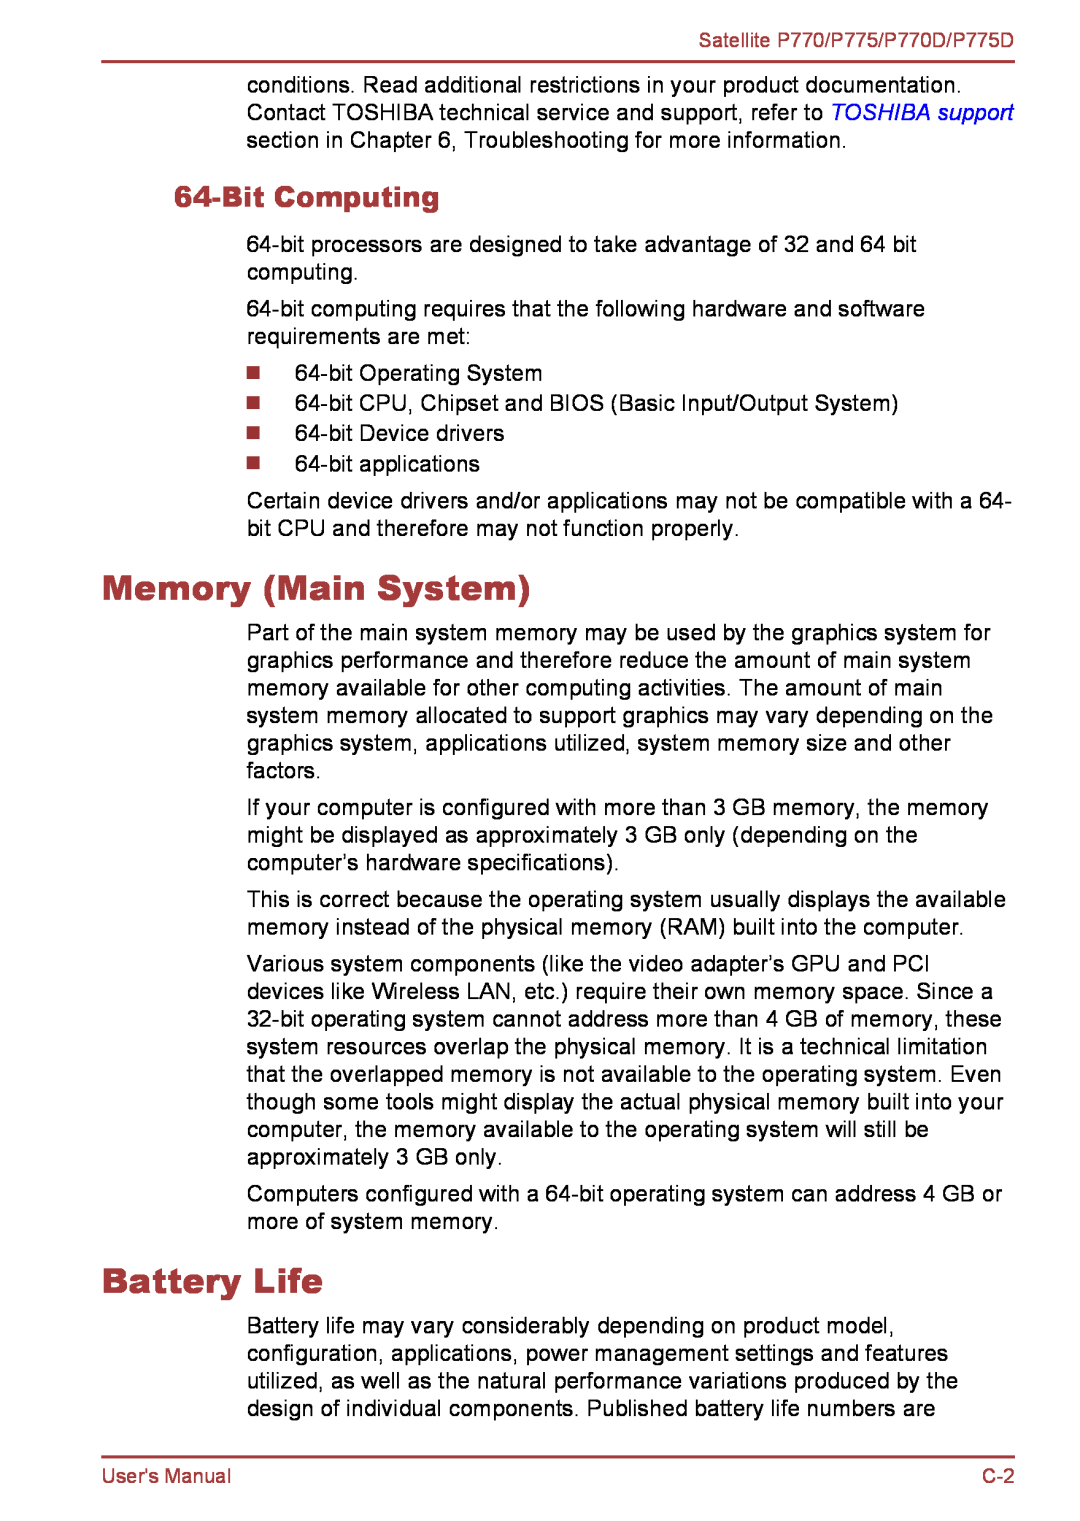 Toshiba P770 user manual Memory Main System, Battery Life, Bit Computing 